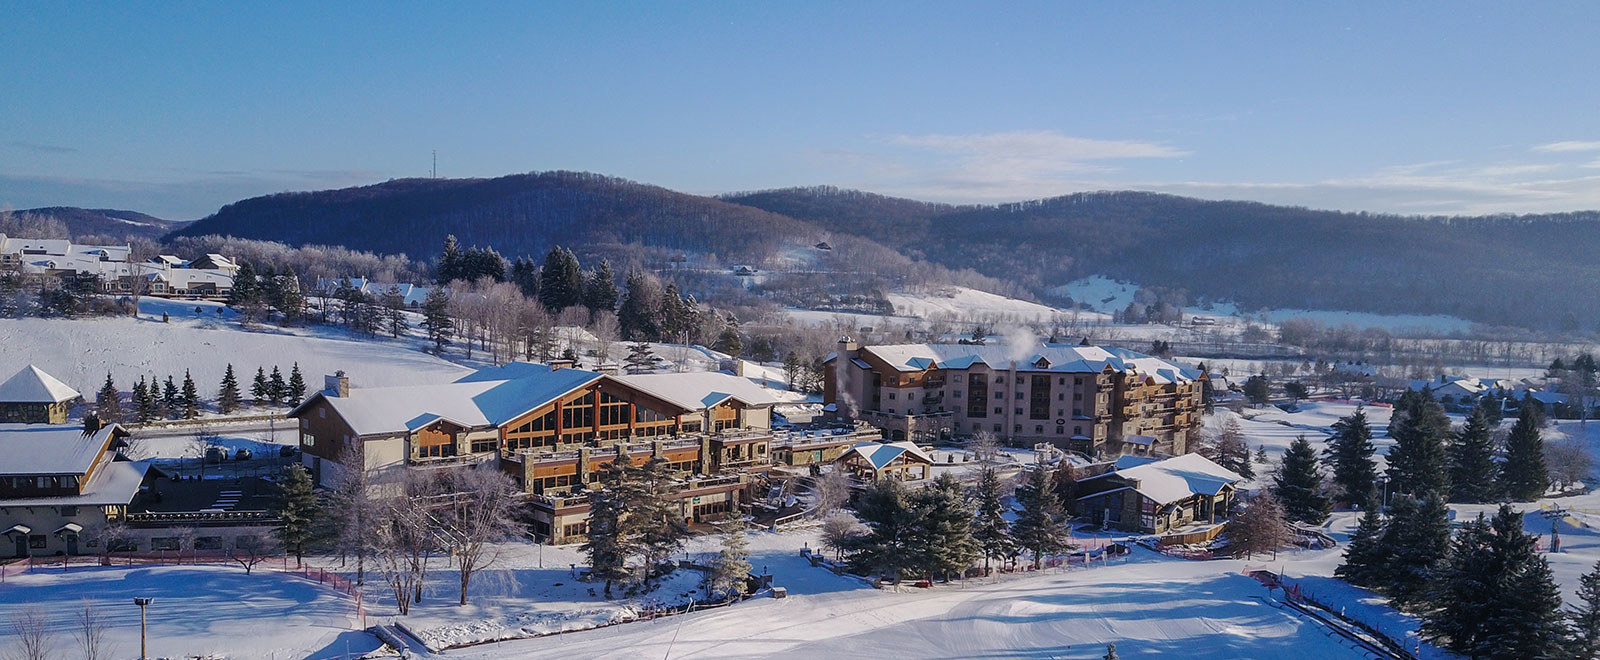 Holiday Valley Ski Resort_Image